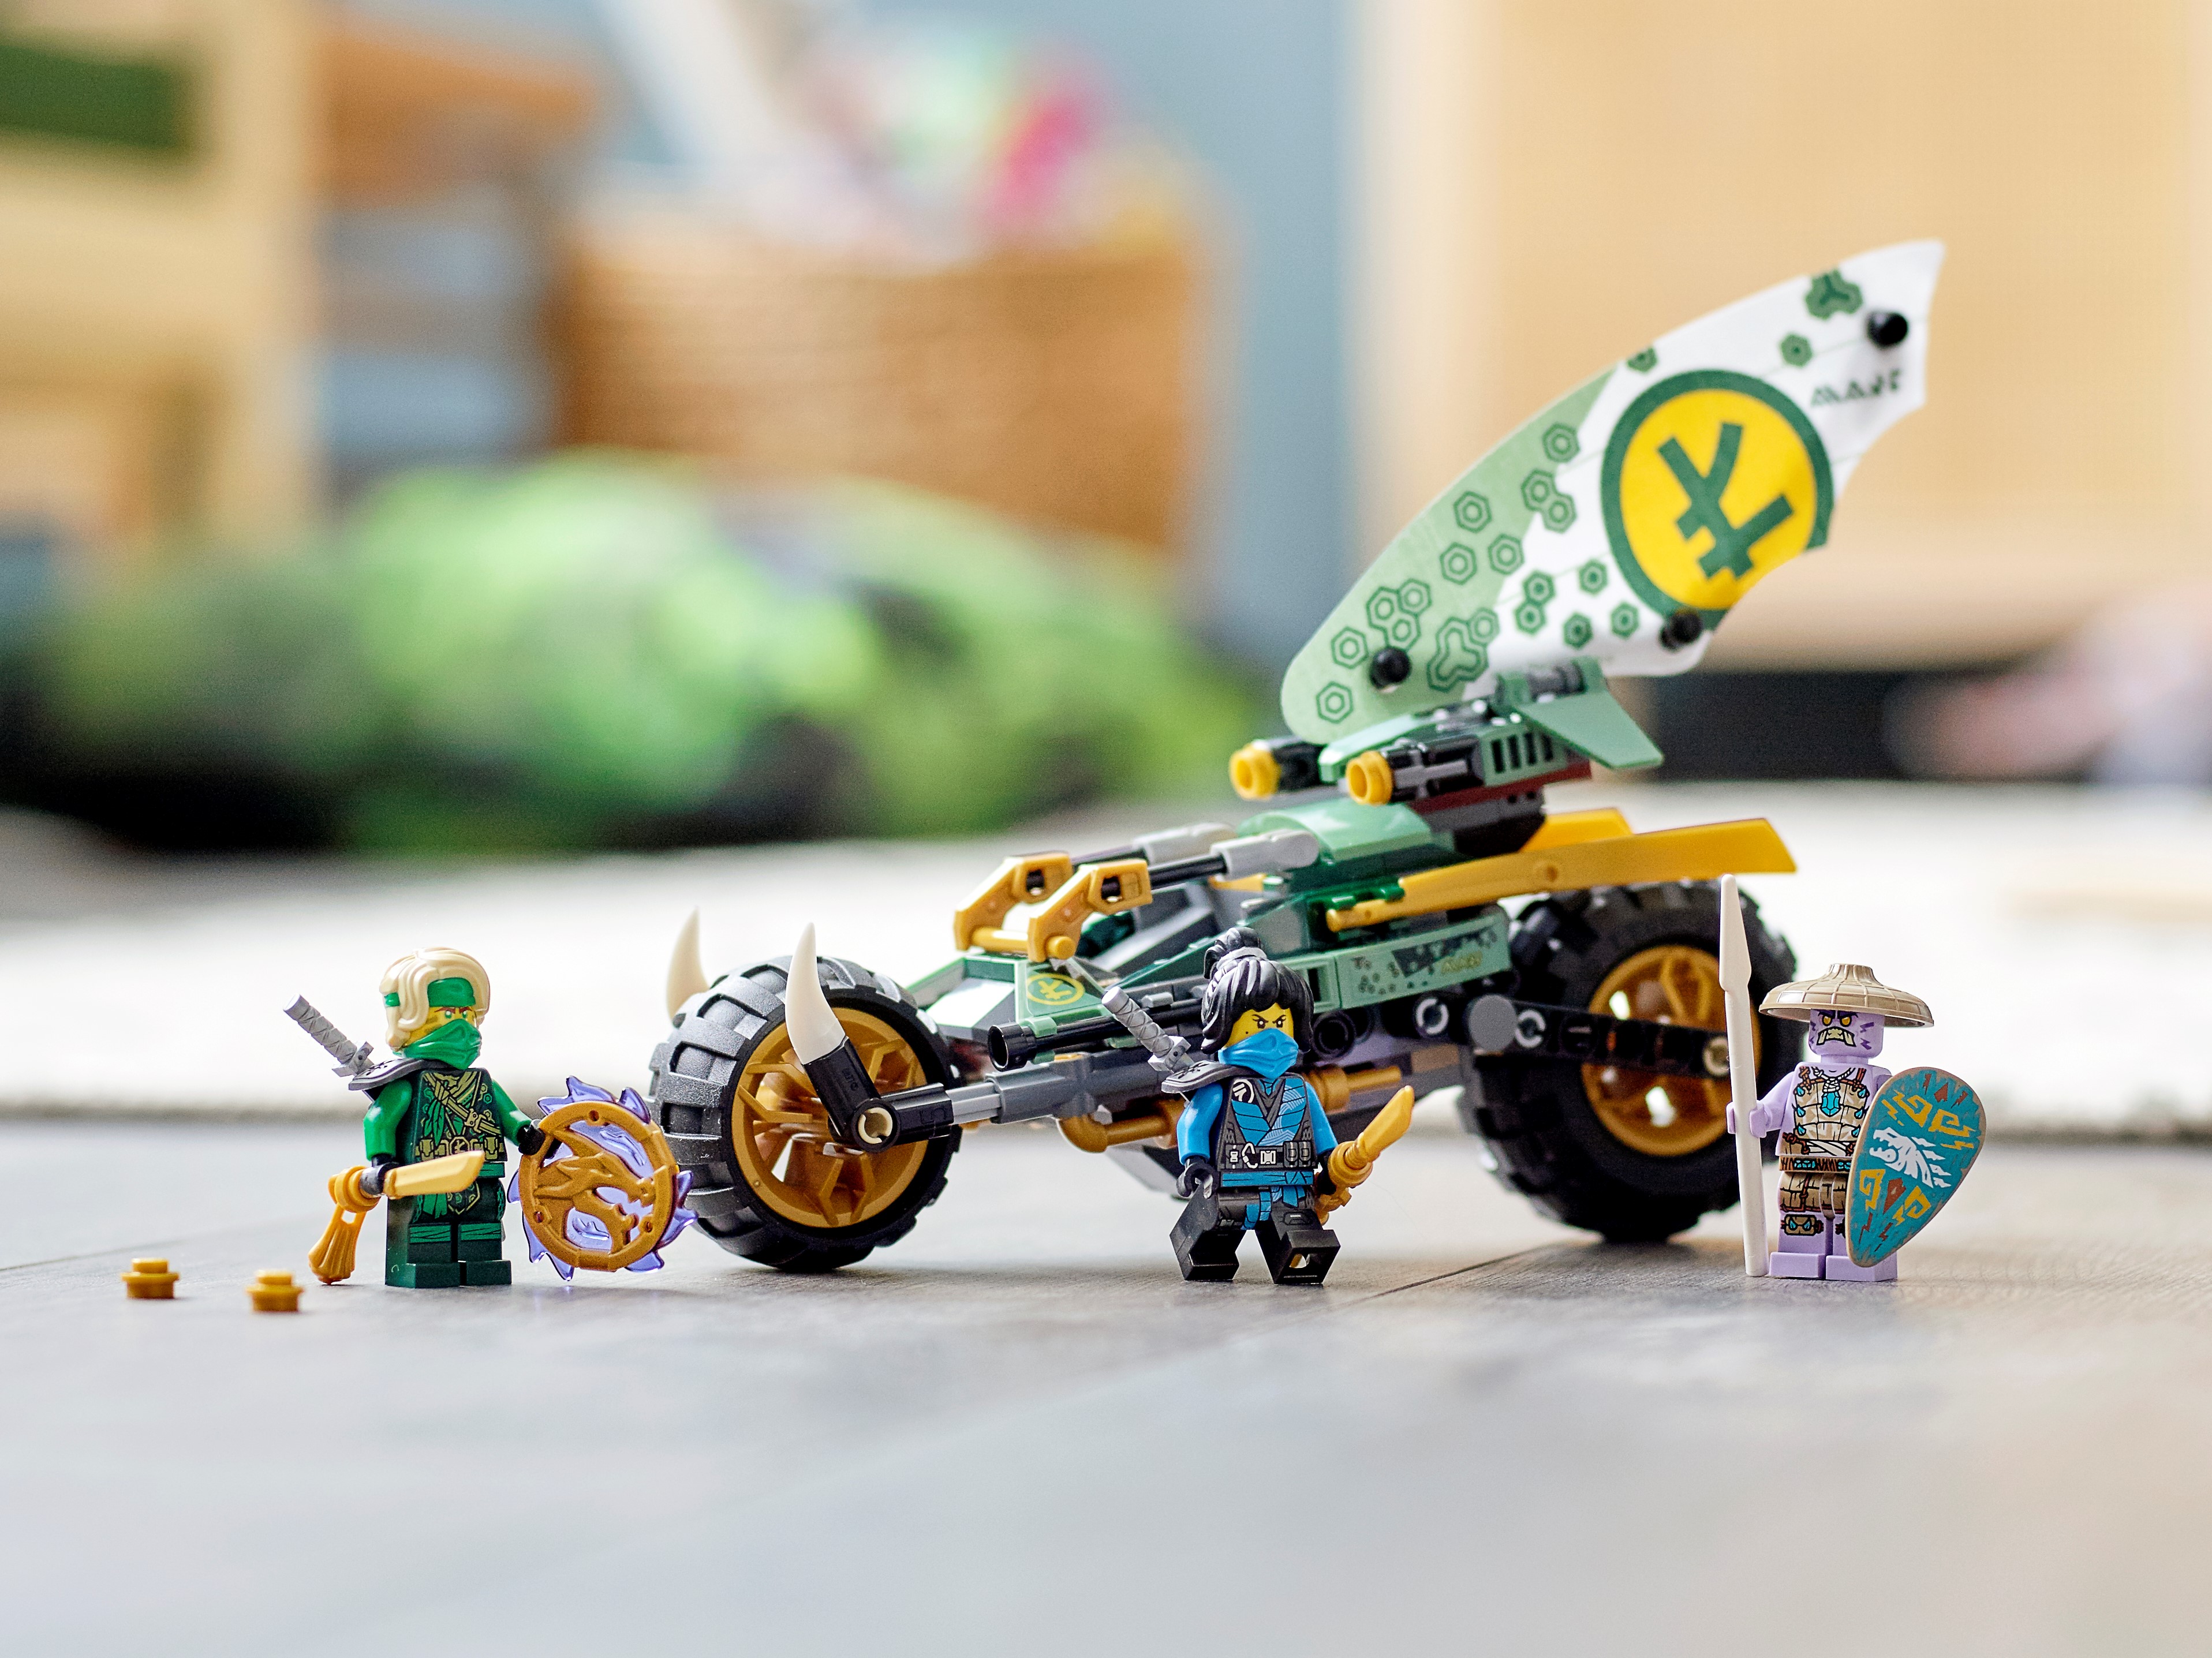 New 2021 LEGO NINJAGO Lloyd’s Jungle Chopper Bike 71745 Building Kit; Ninja Bike Toy Featuring NINJAGO Lloyd and NYA Minifigures 183 Pieces ; Top Toy for Kids Who Love Action-Packed Creative Play